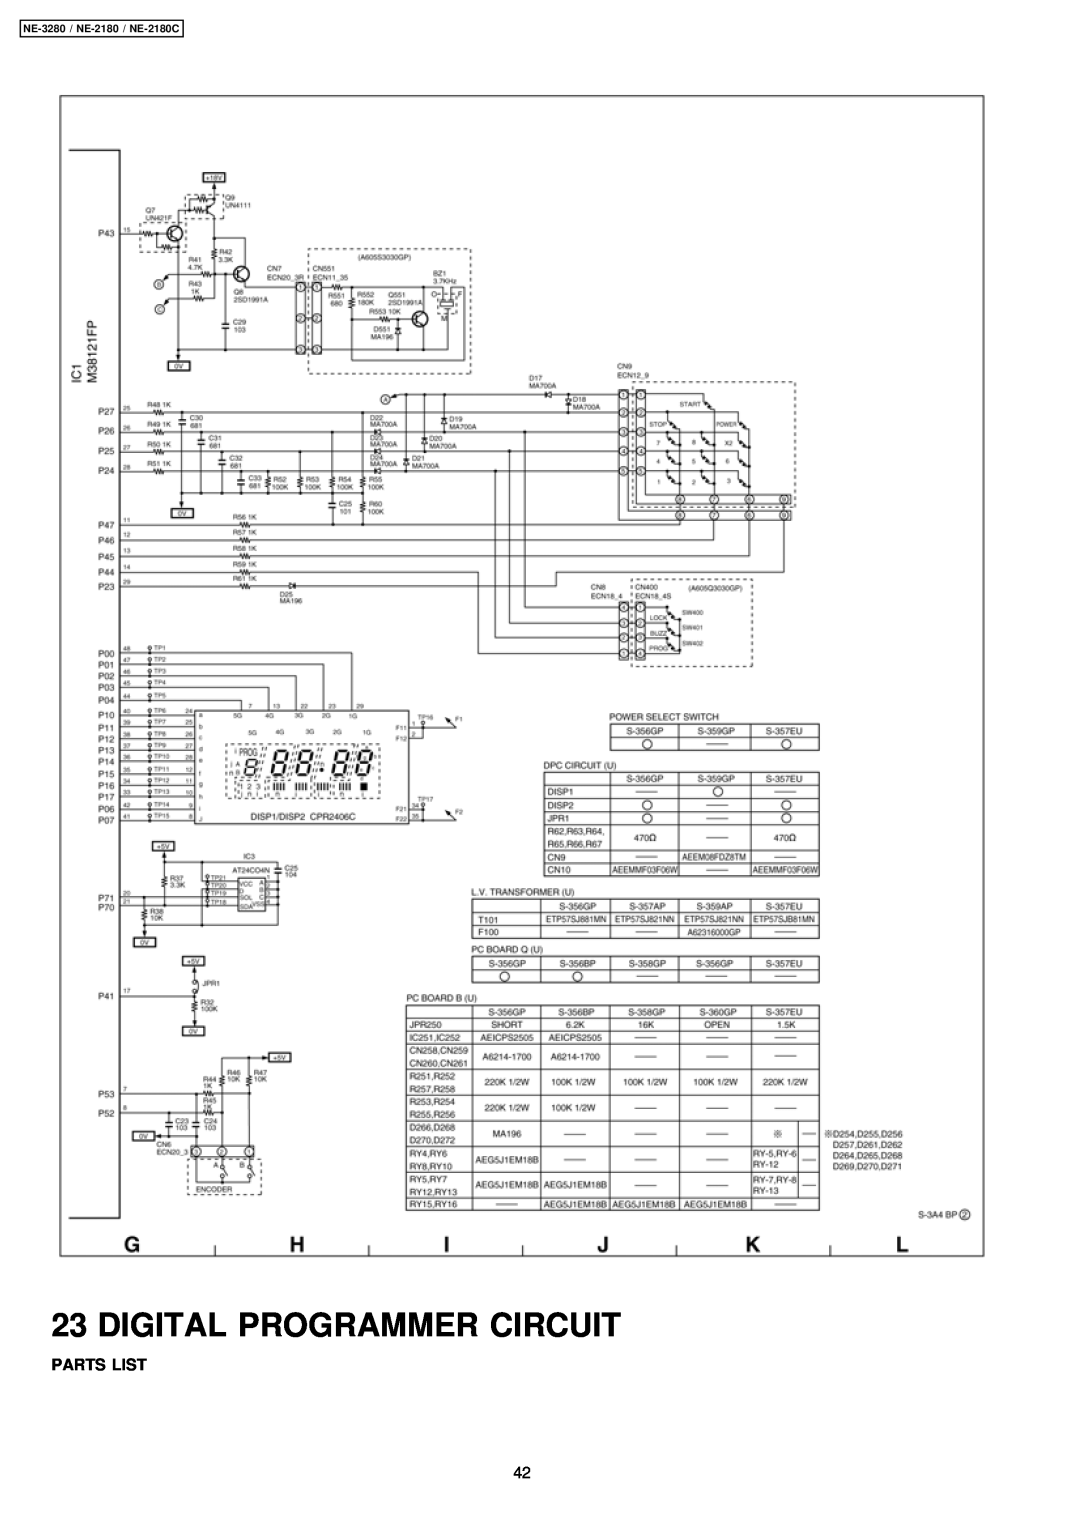 Panasonic manual Digital Programmer Circuit, Parts List, NE-3280 / NE-2180 / NE-2180C 